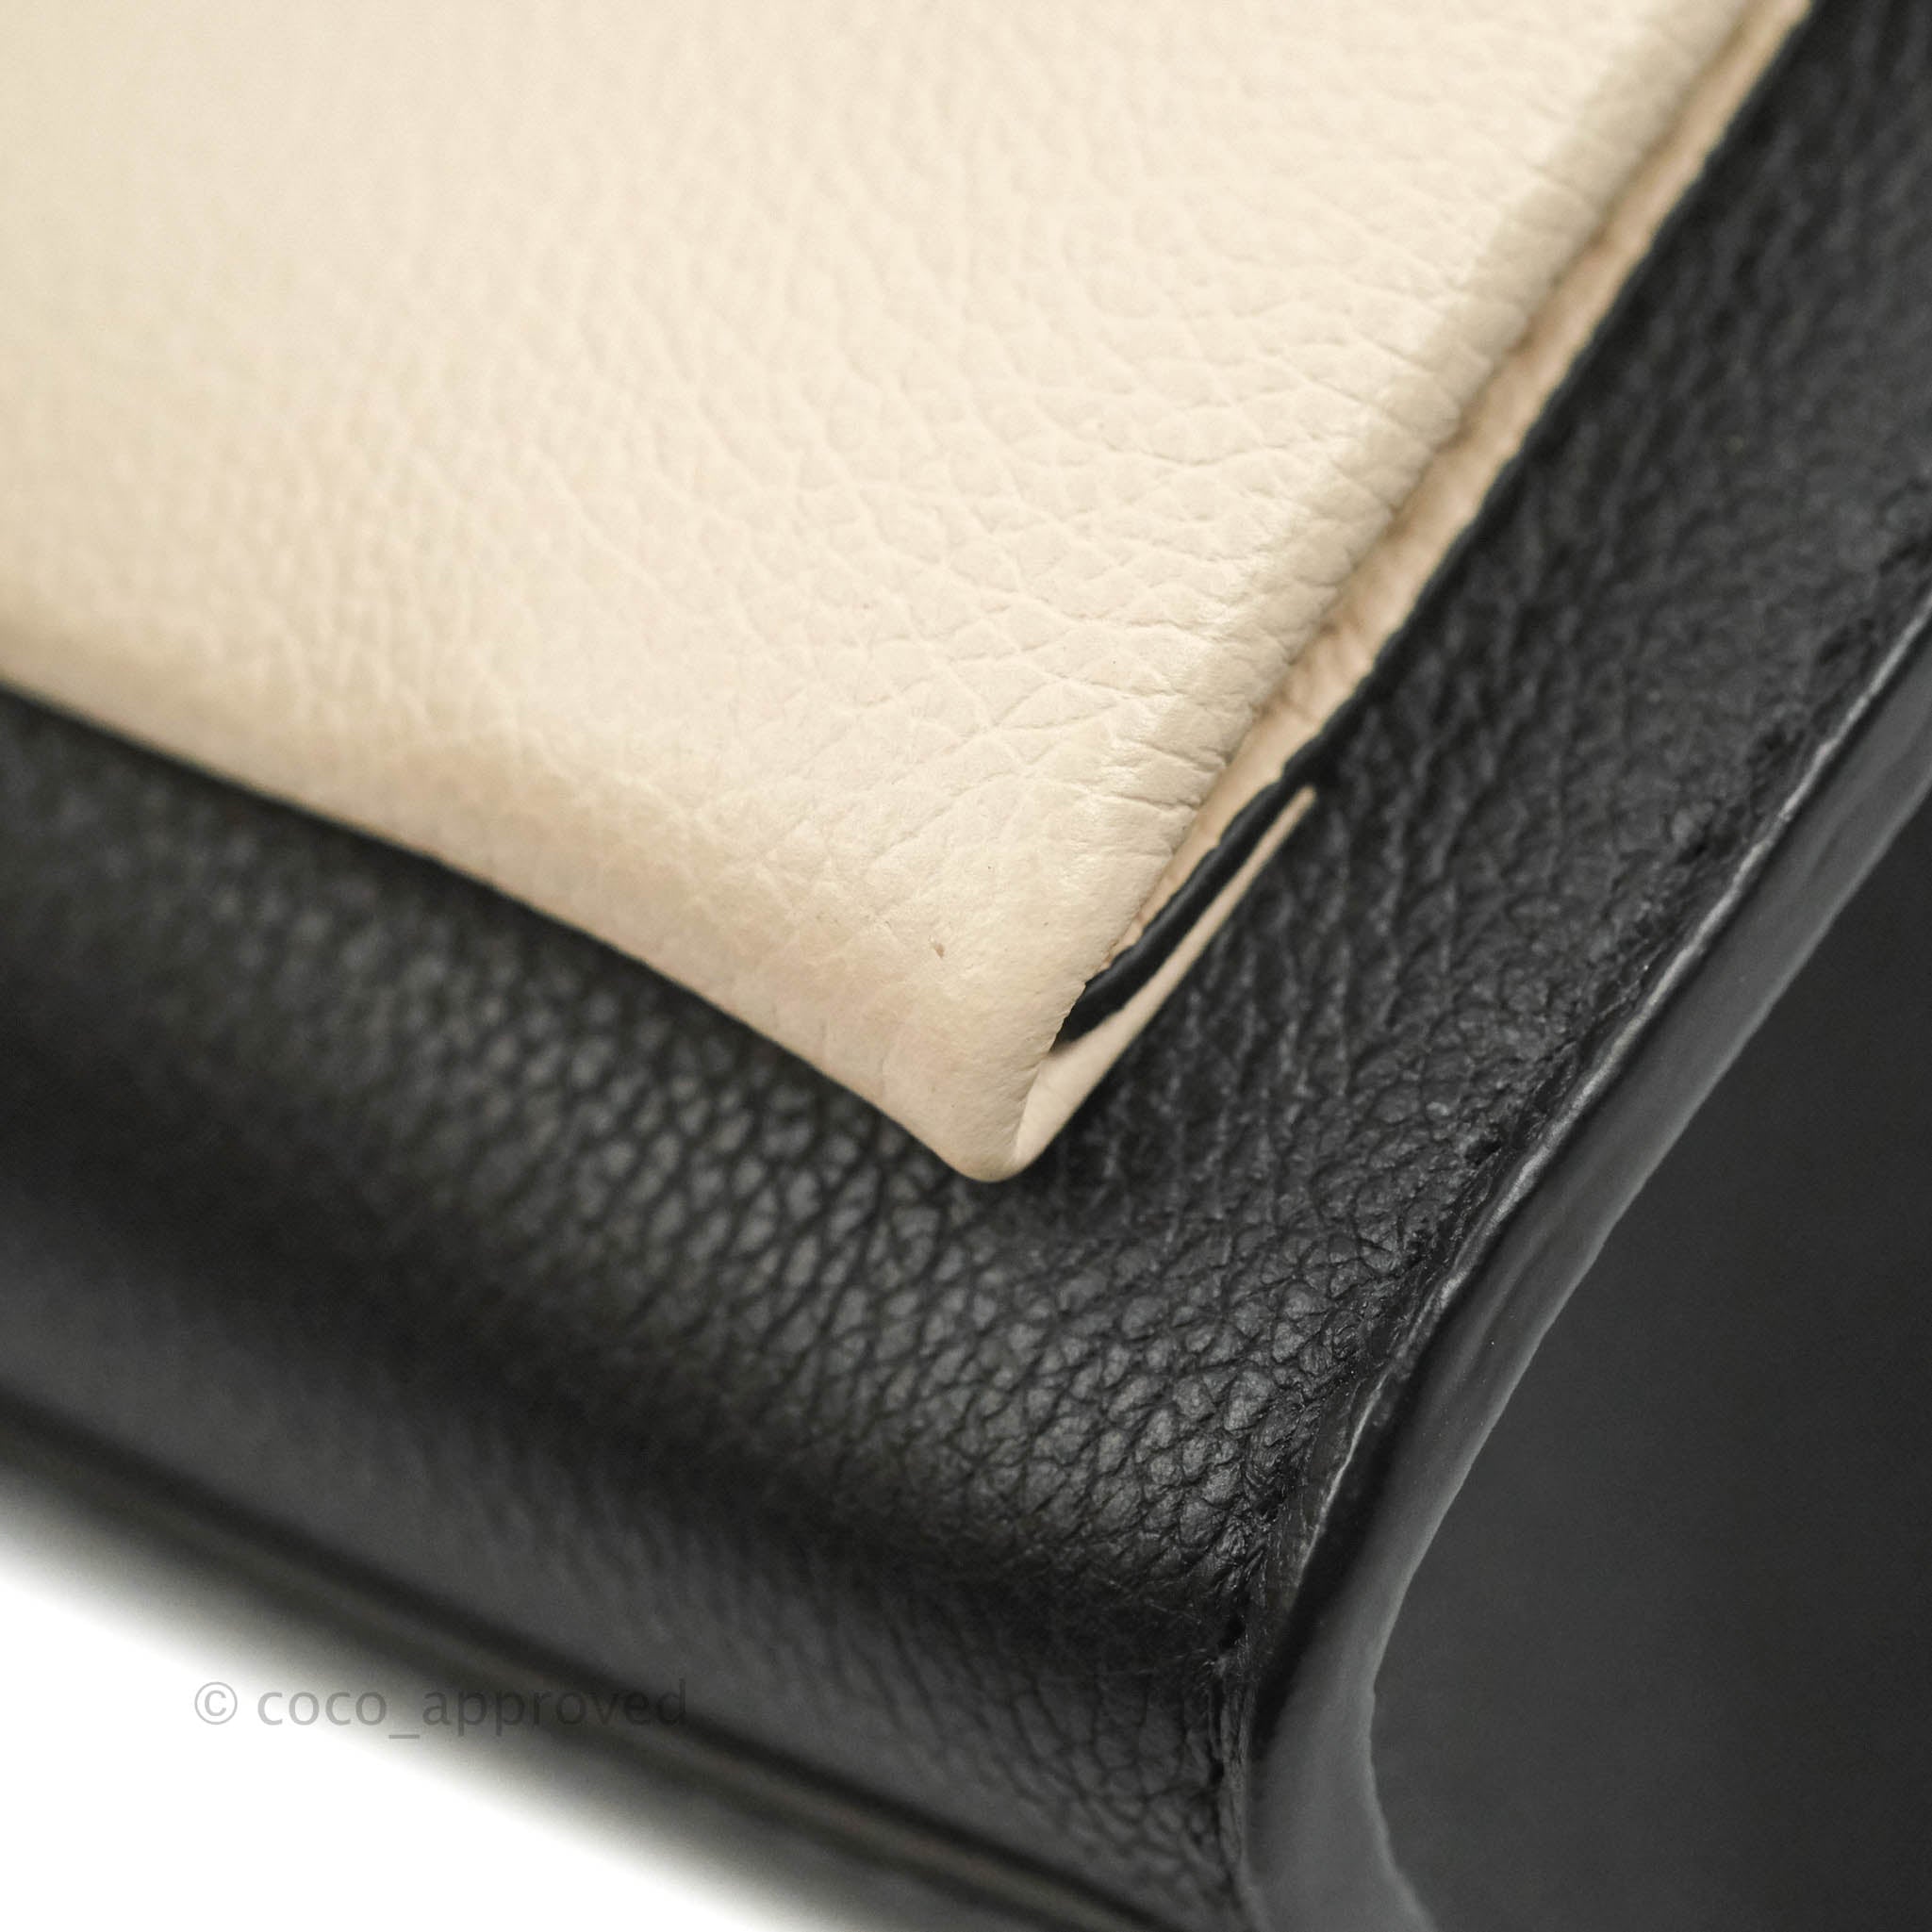 Preloved Louis Vuitton Padlock On Strap Bag 051523 - 200 OFF – KimmieBBags  LLC